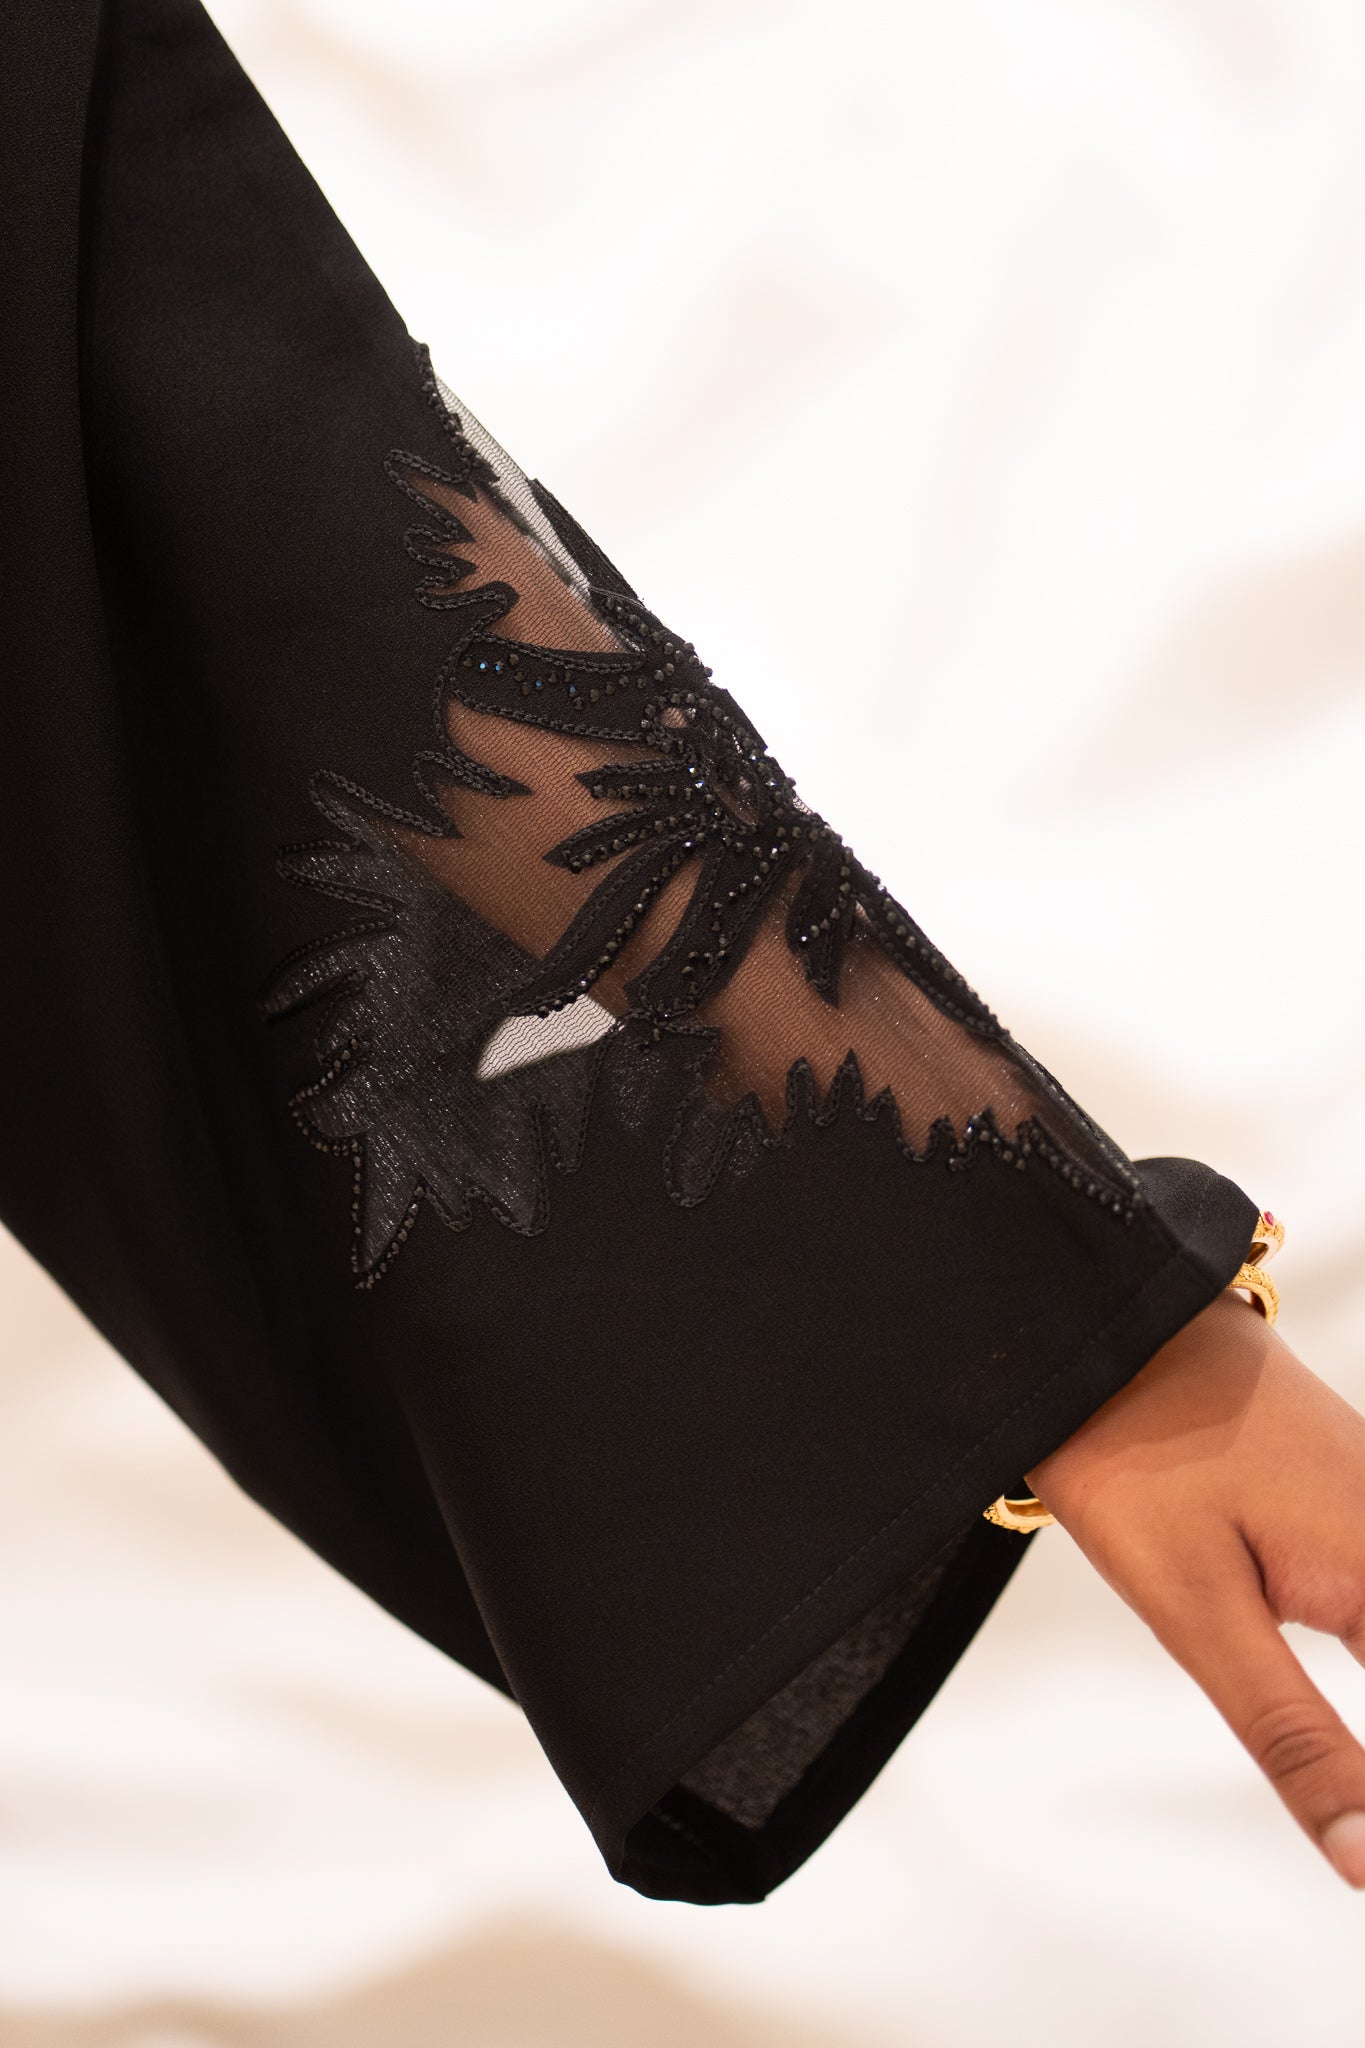 Black Abaya - Sheer Panel's